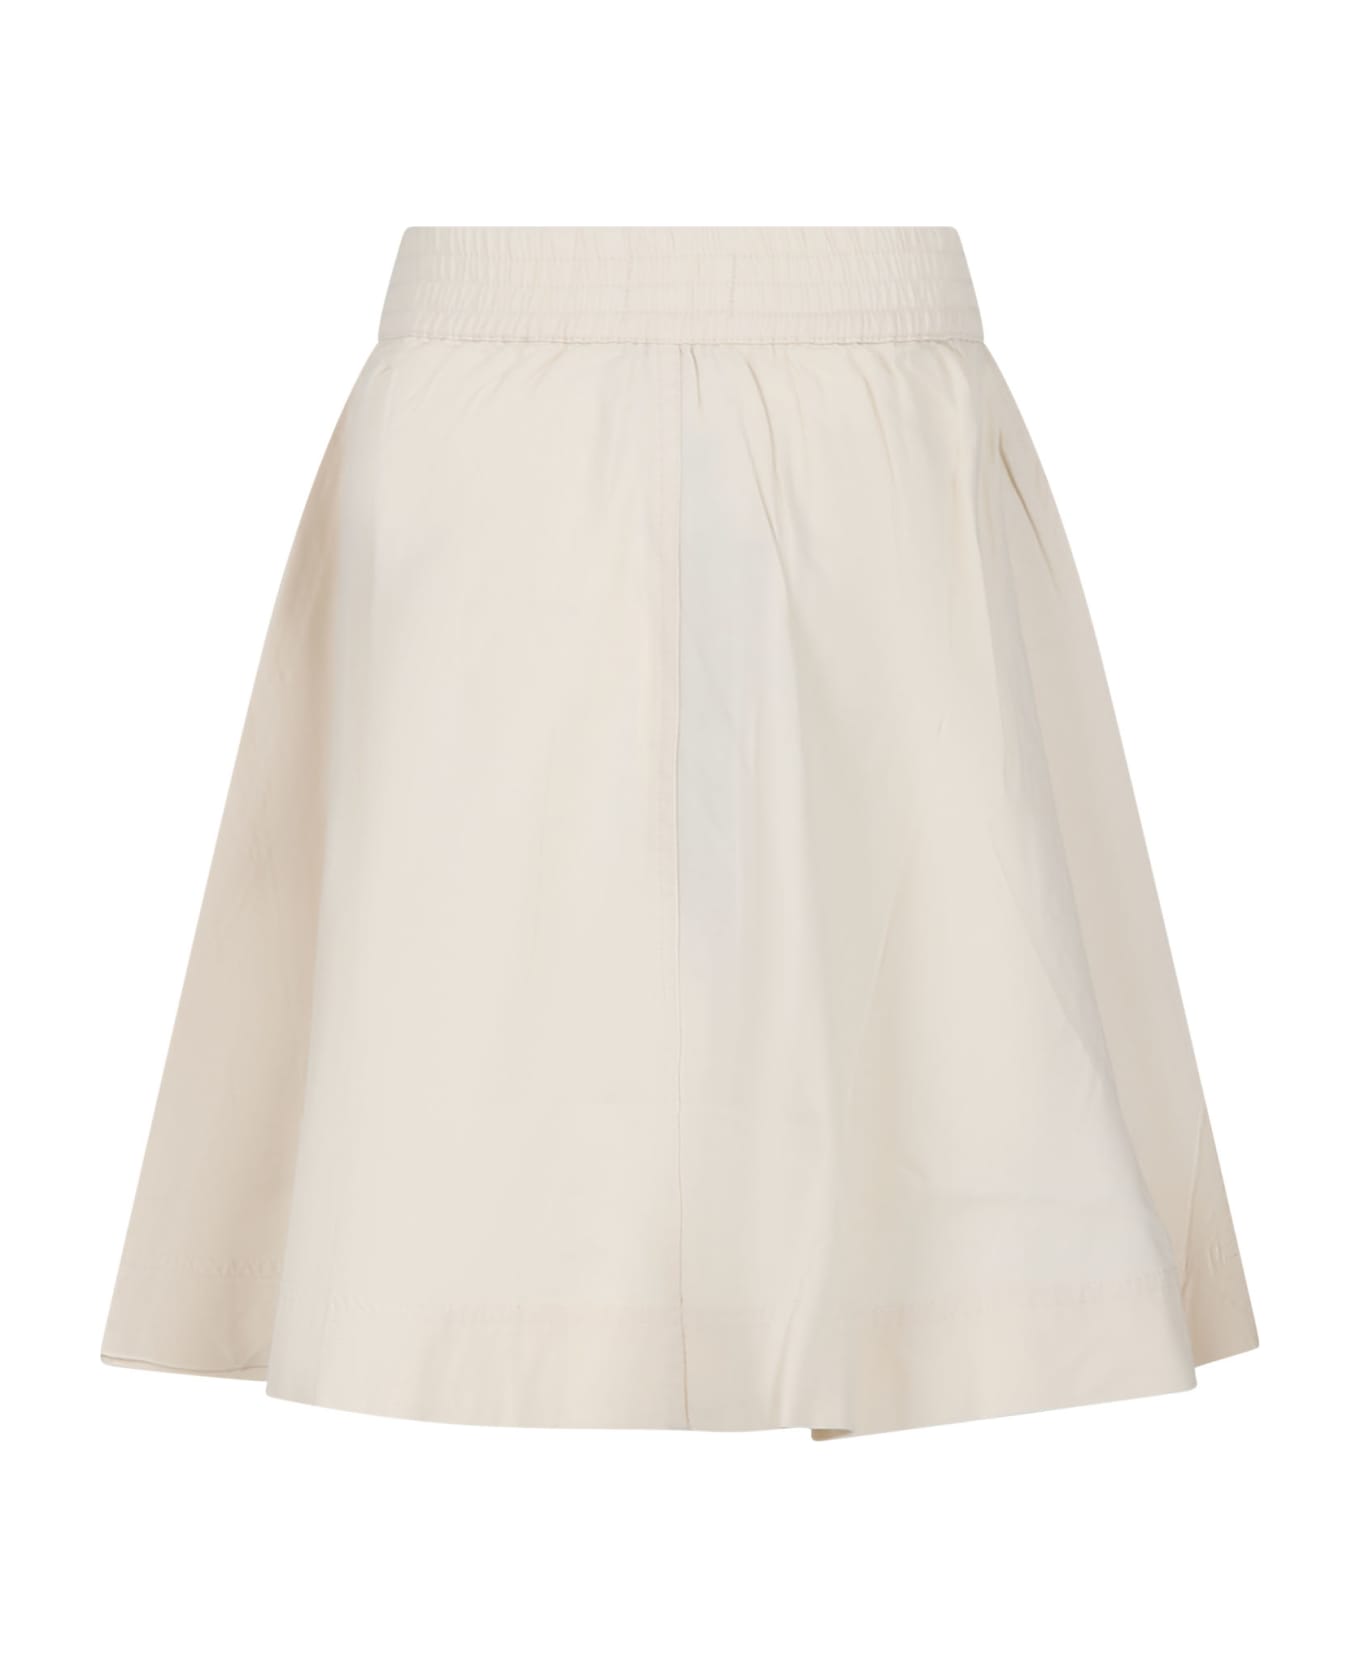 Molo Ivory Skirt For Girl - Ivory ボトムス